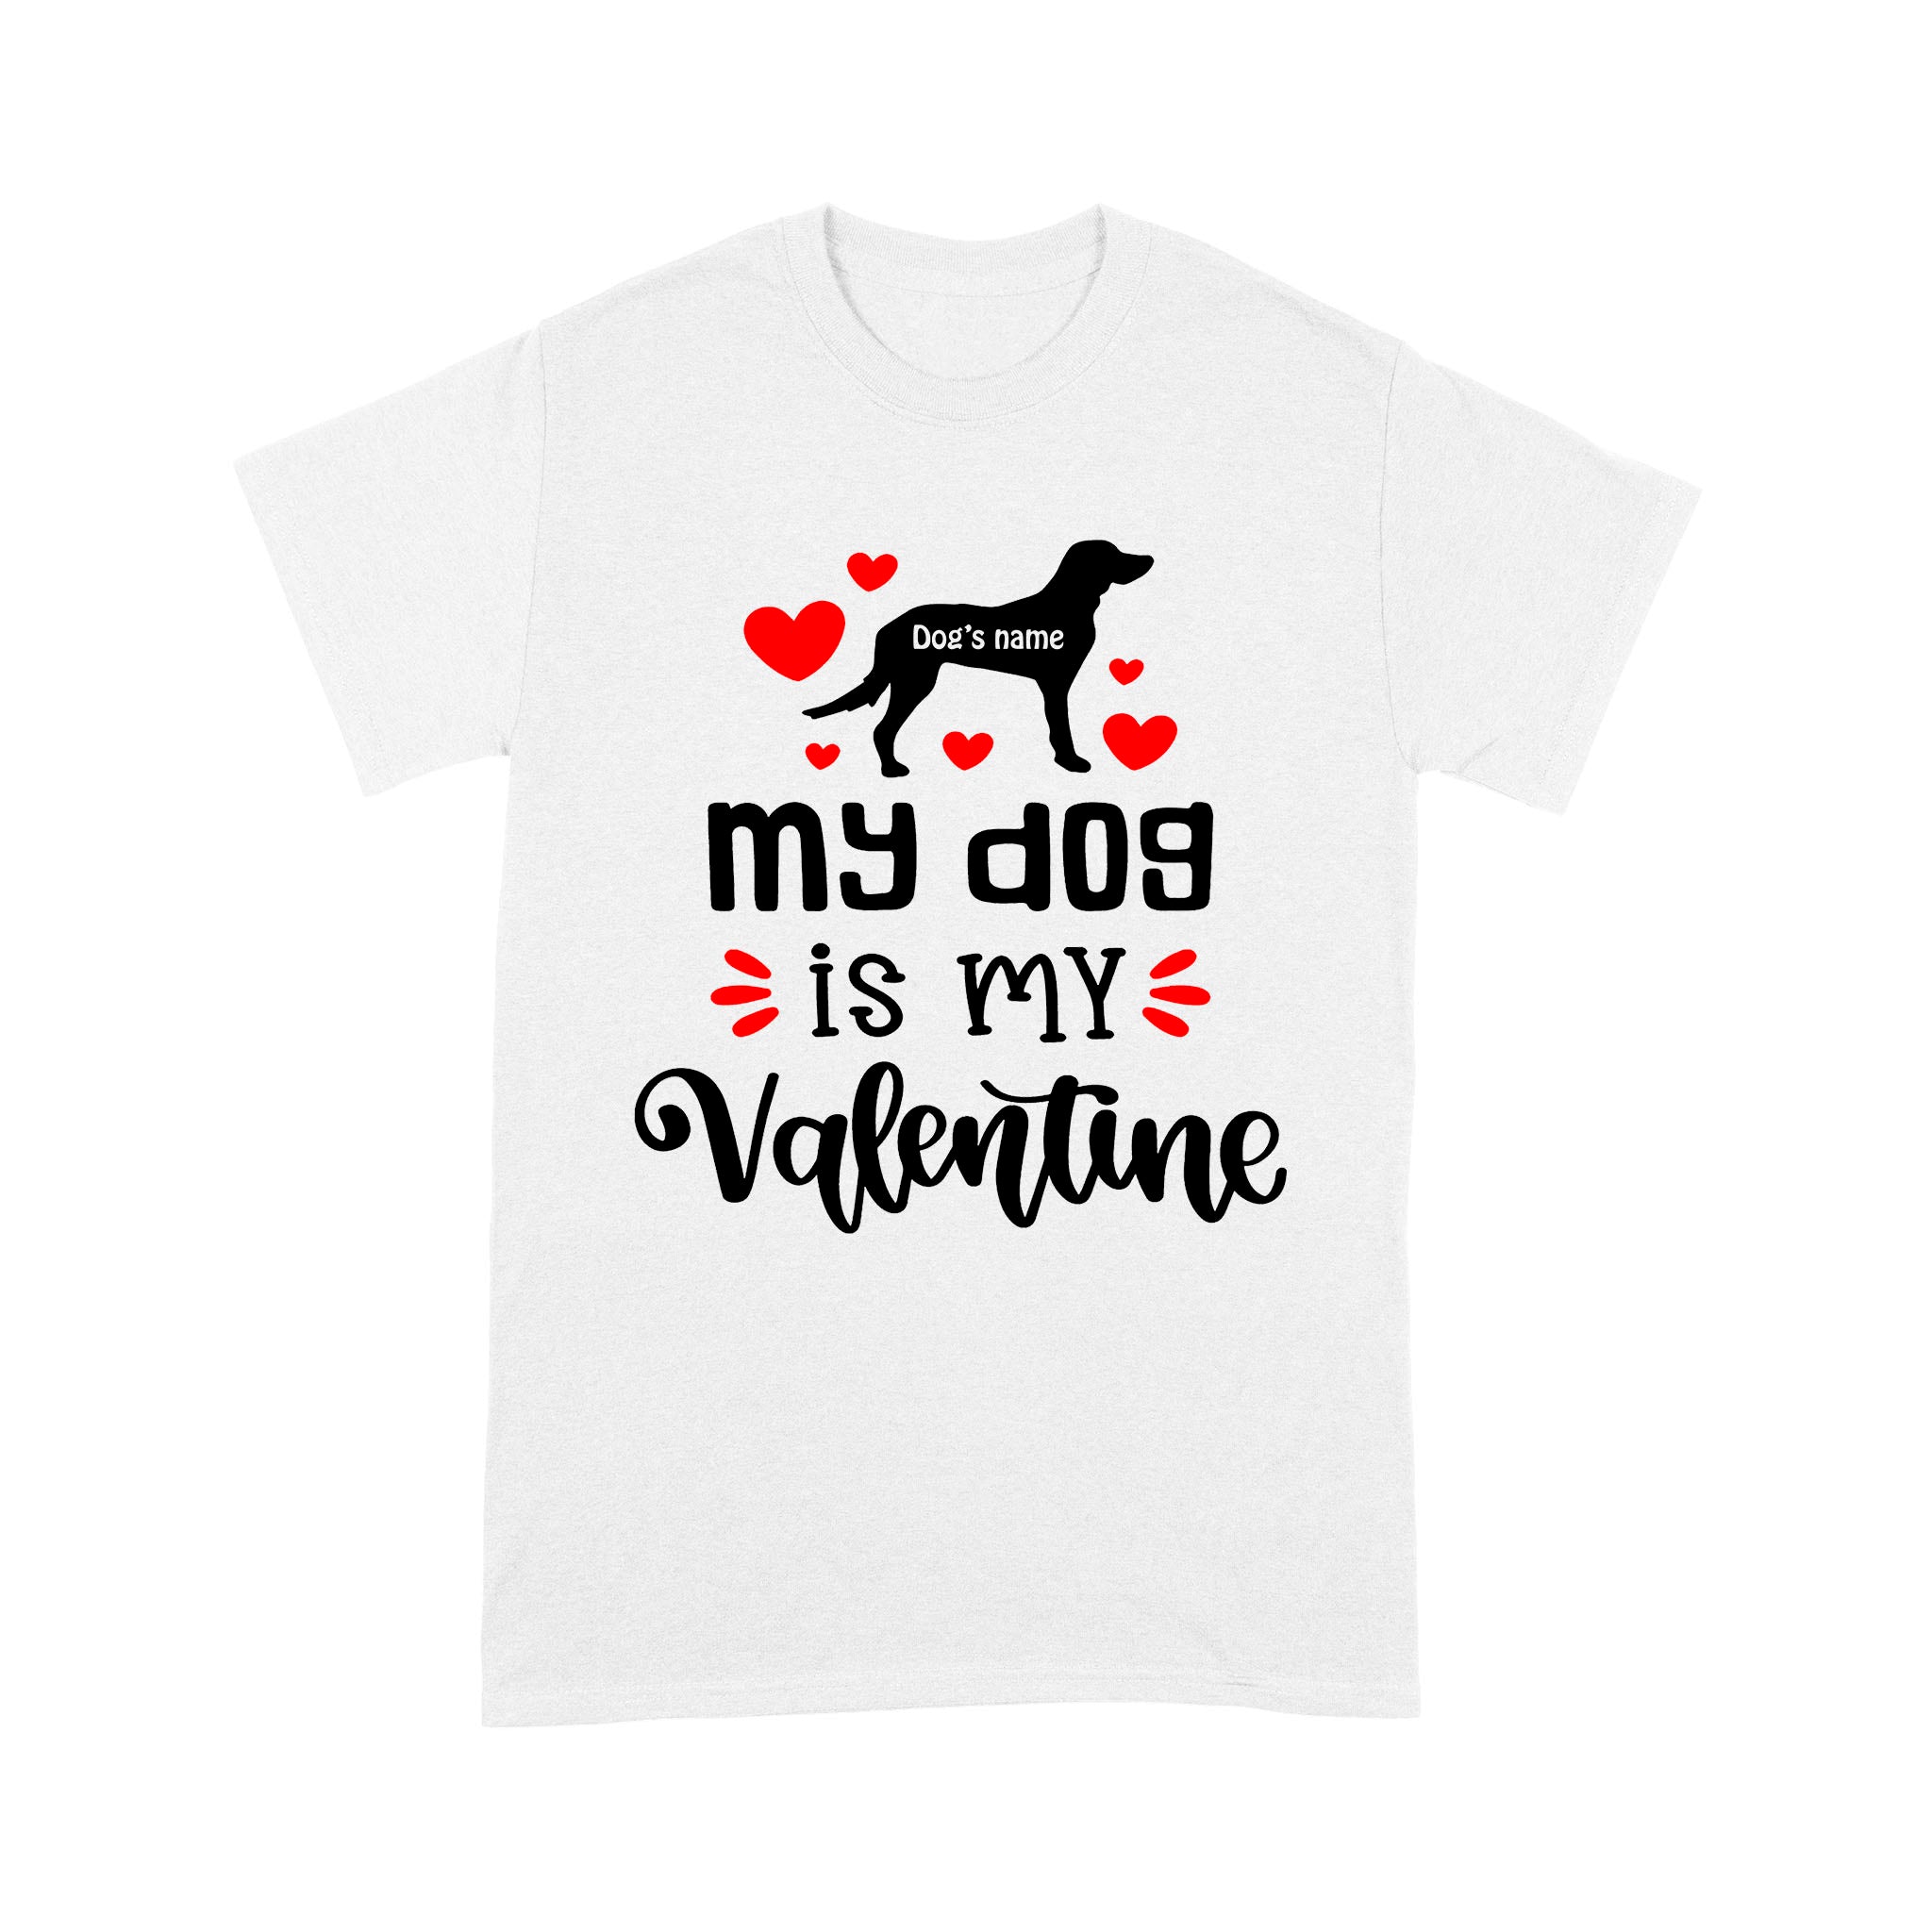 My dog is my valentine custom dog's Name shirt, valentine gift for dog mom dog dad - FSD1326D08